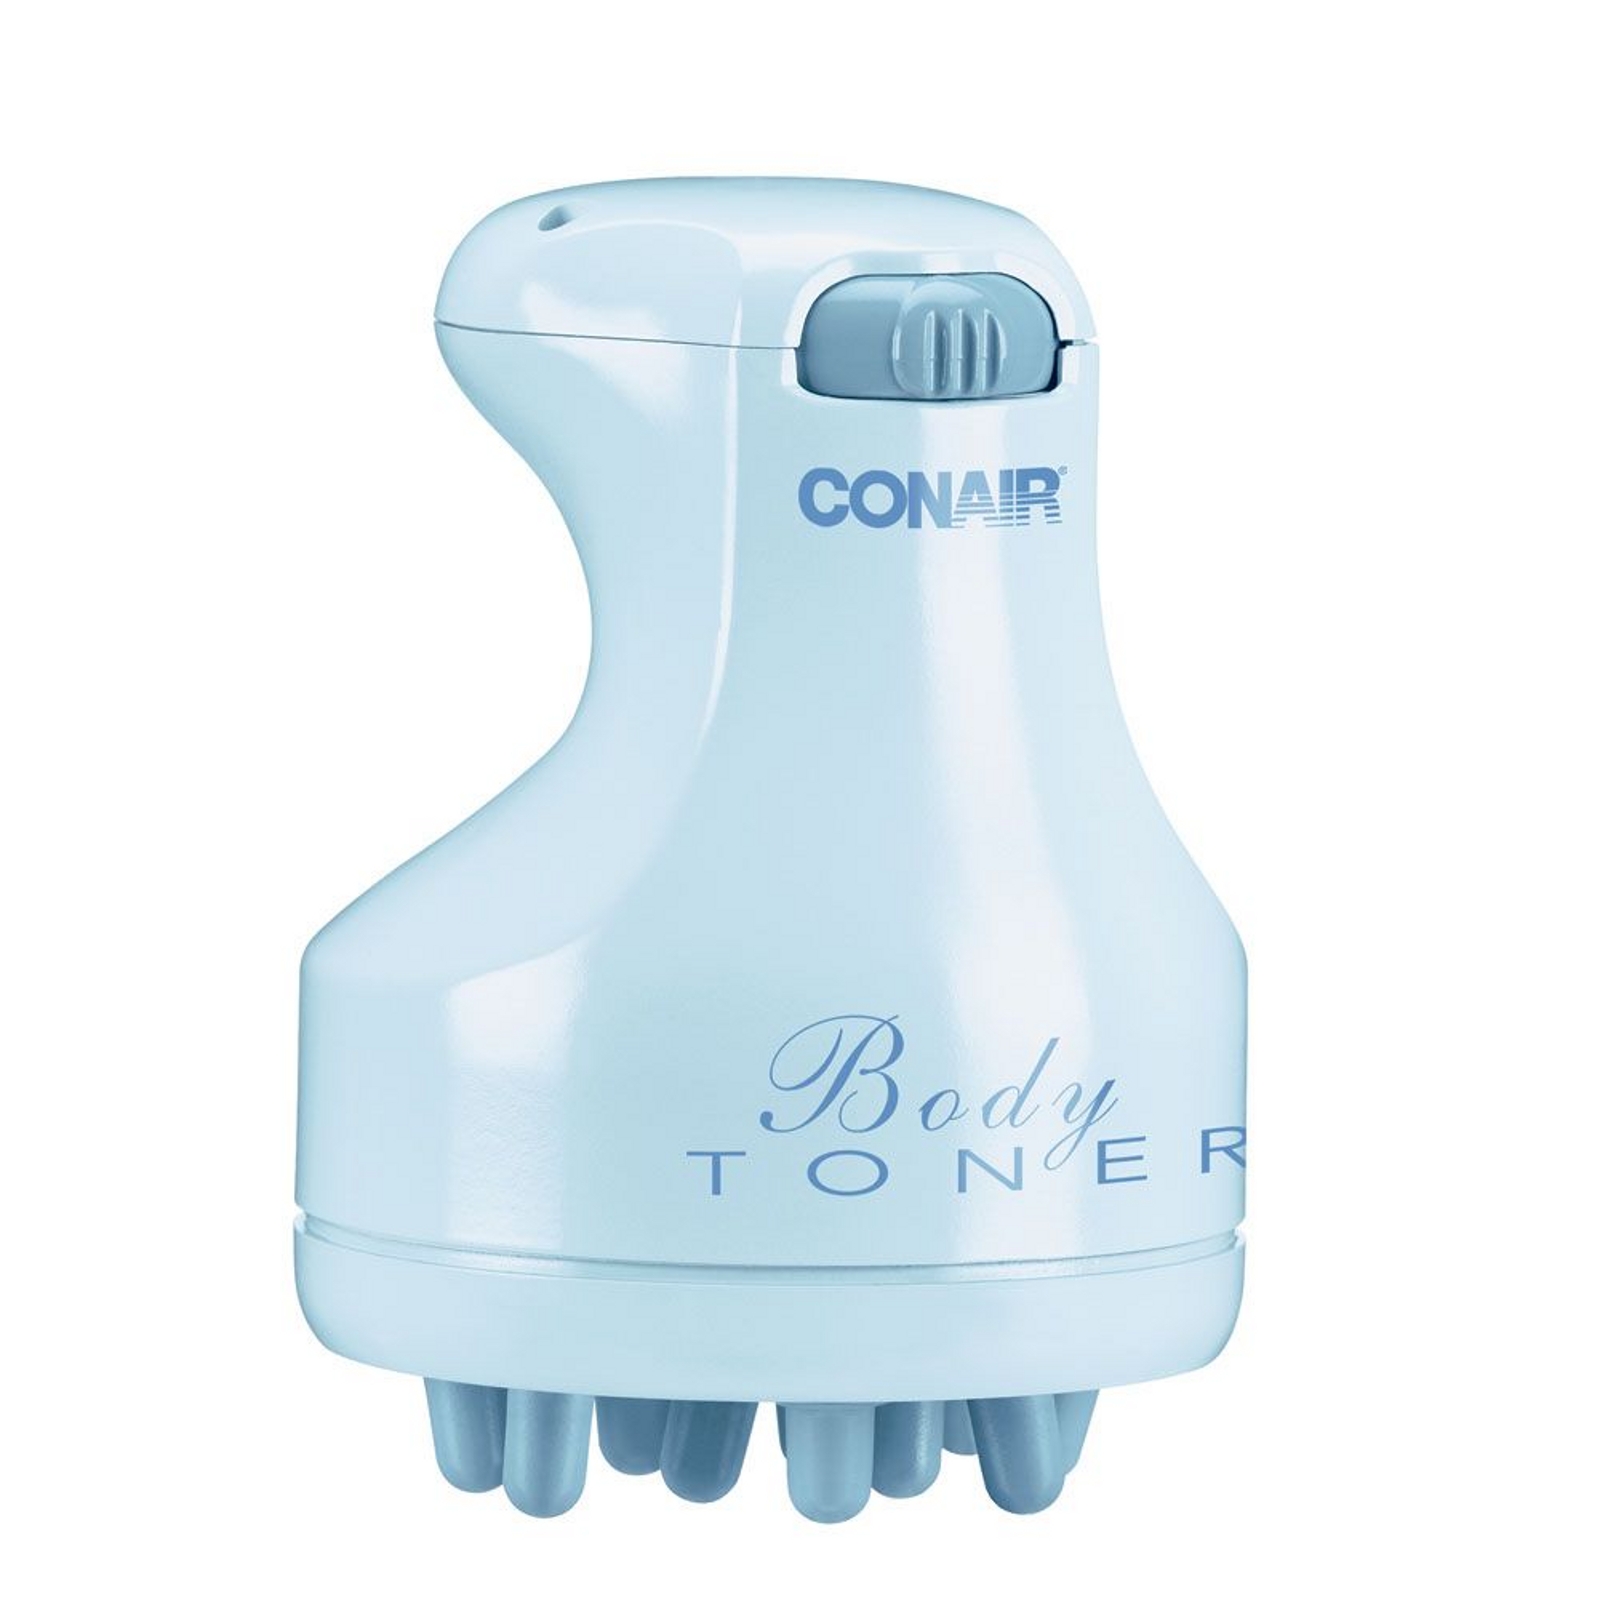 Conair Body Toner